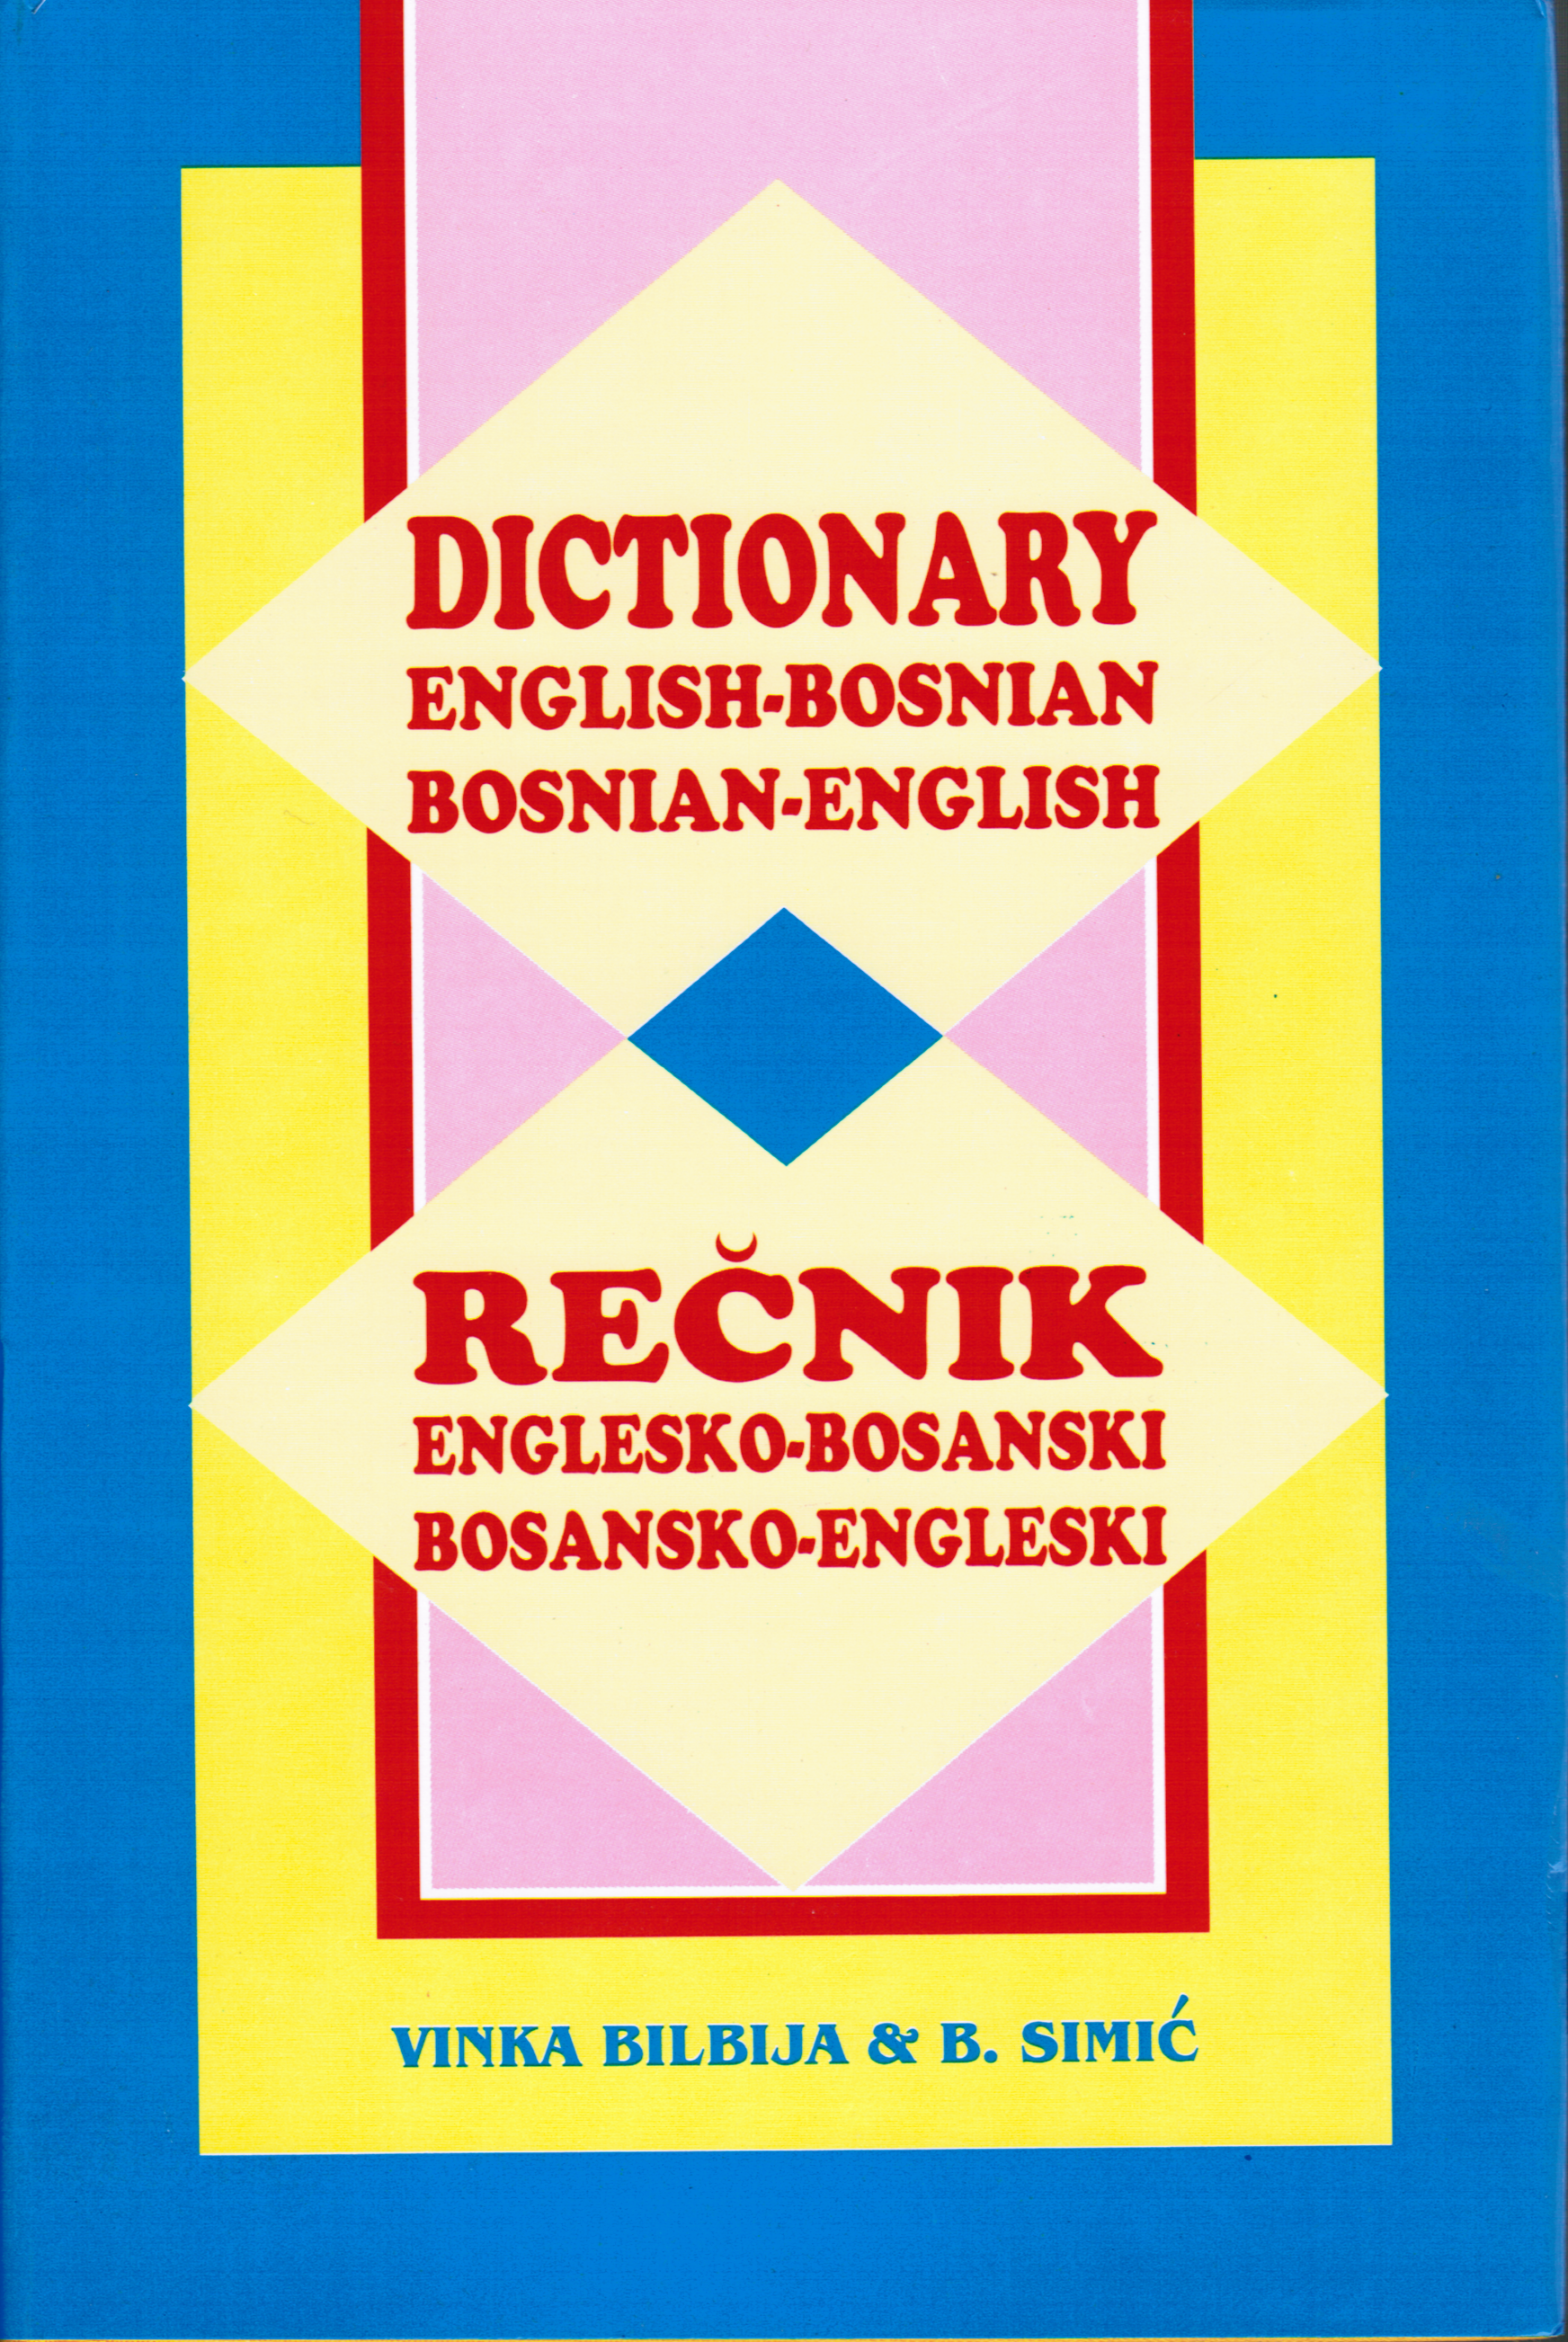 Bosnian-English and English-Bosnian Dictionary